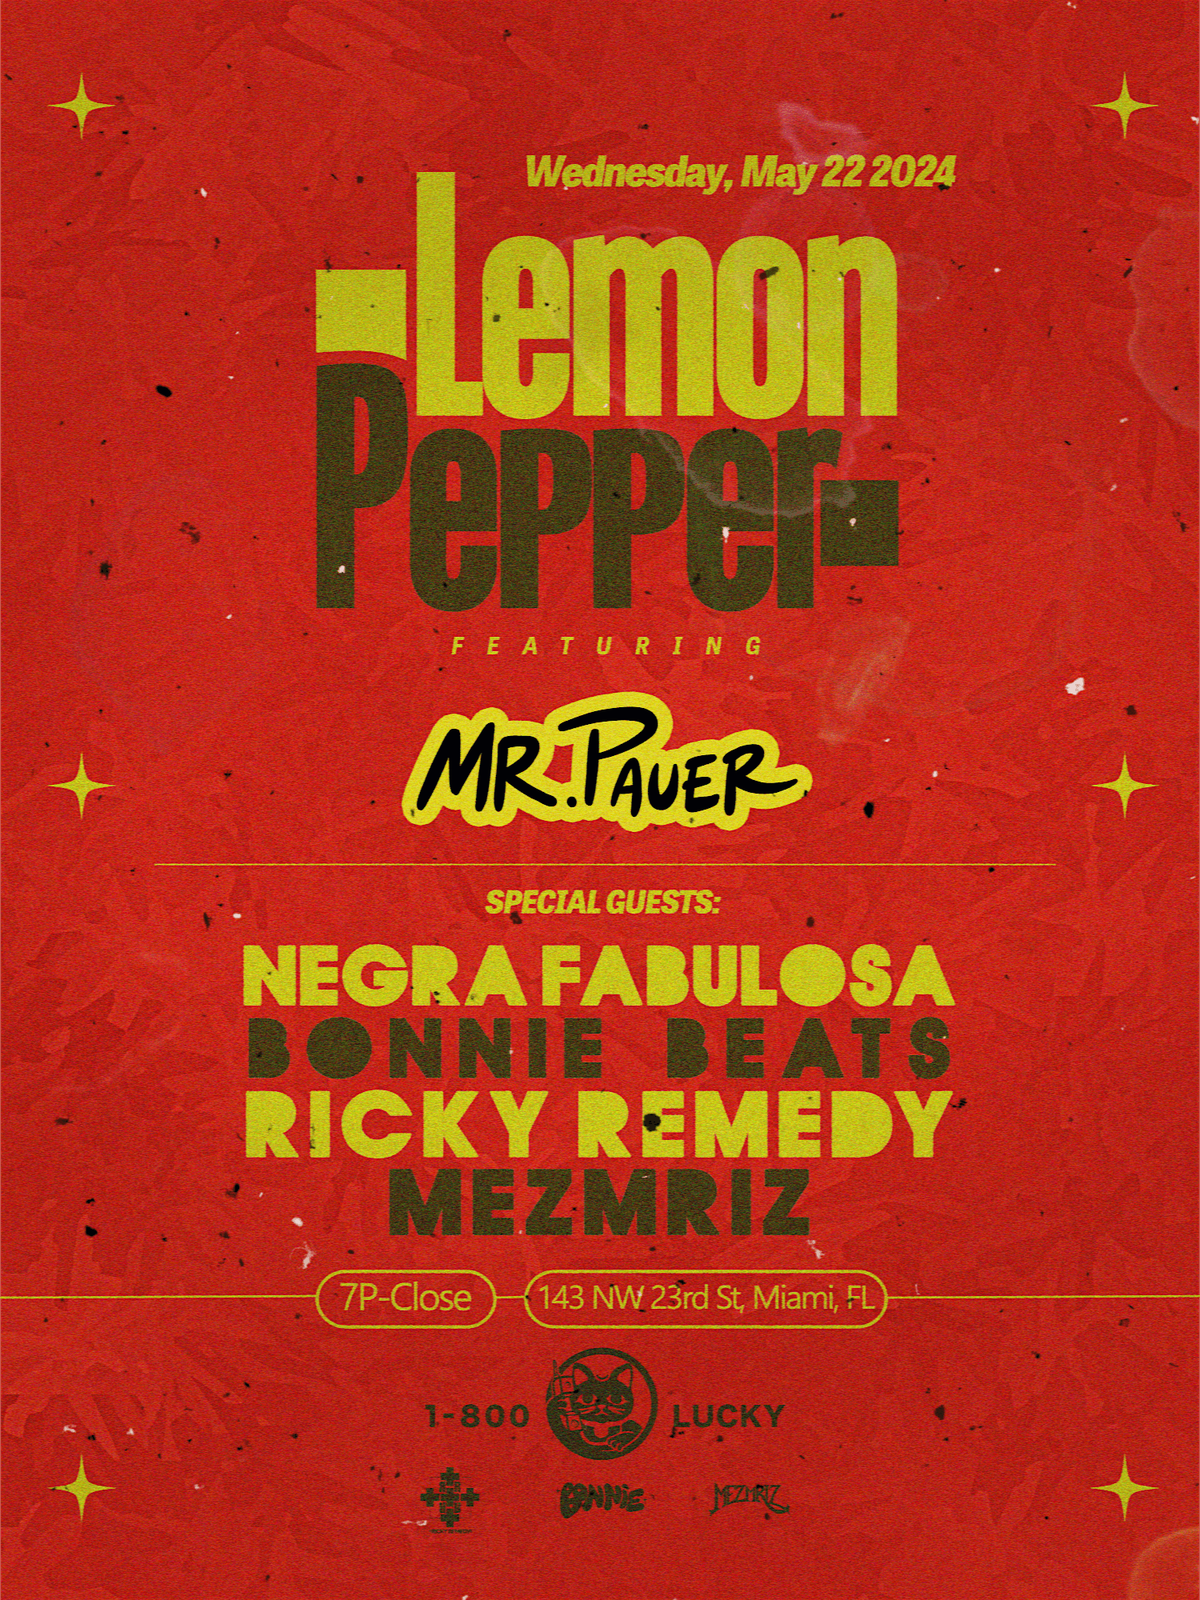 lemon pepper @1-800 lucky  free with RSVP